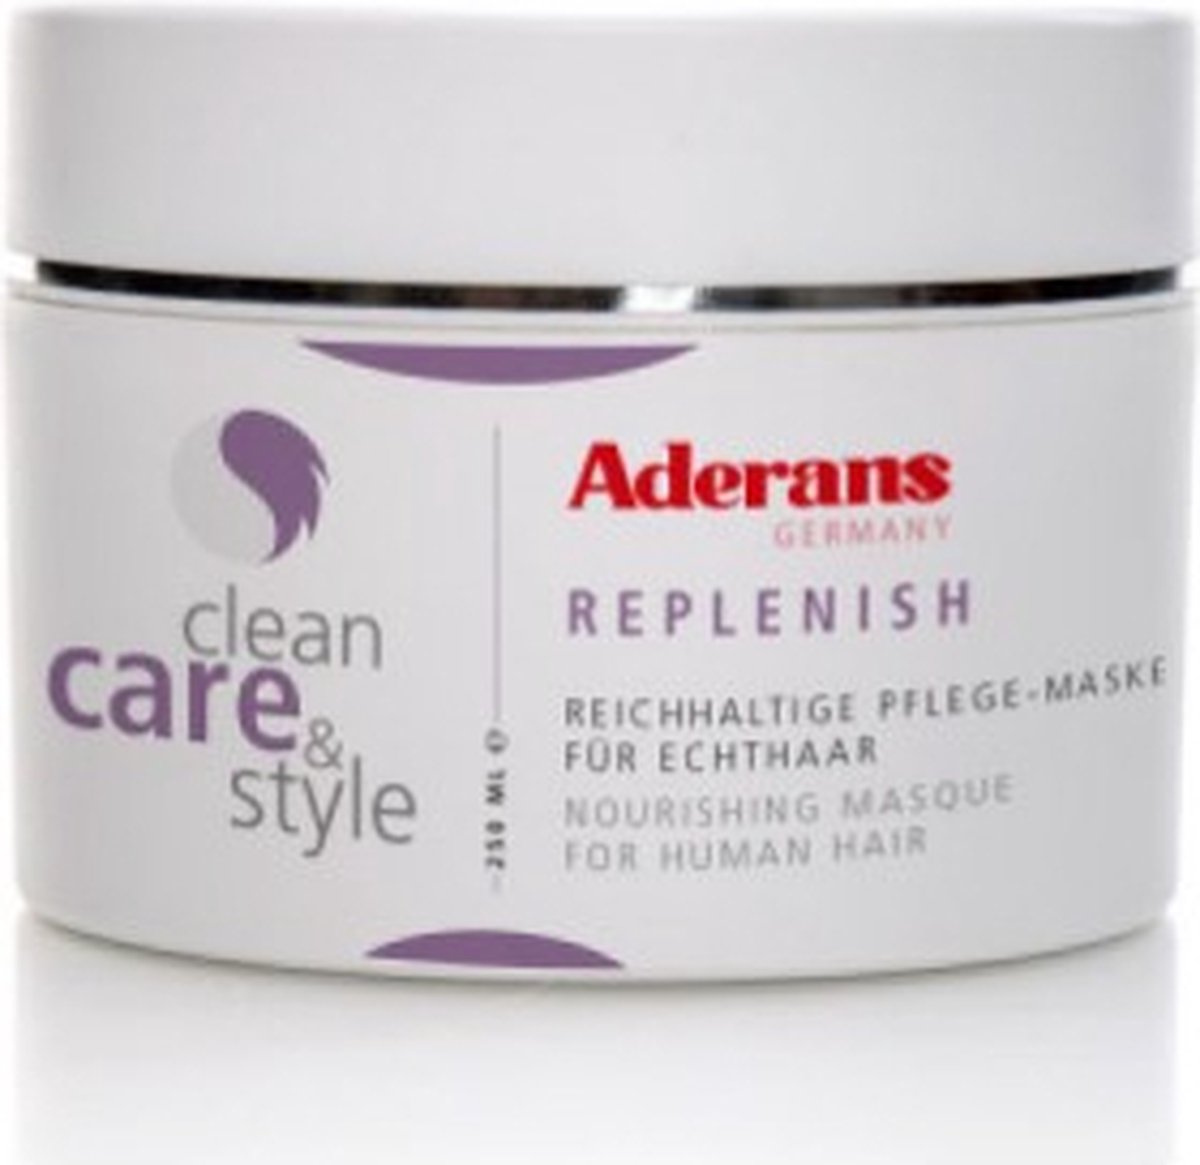 Aderans Clean Care & Stile Replenish Masque